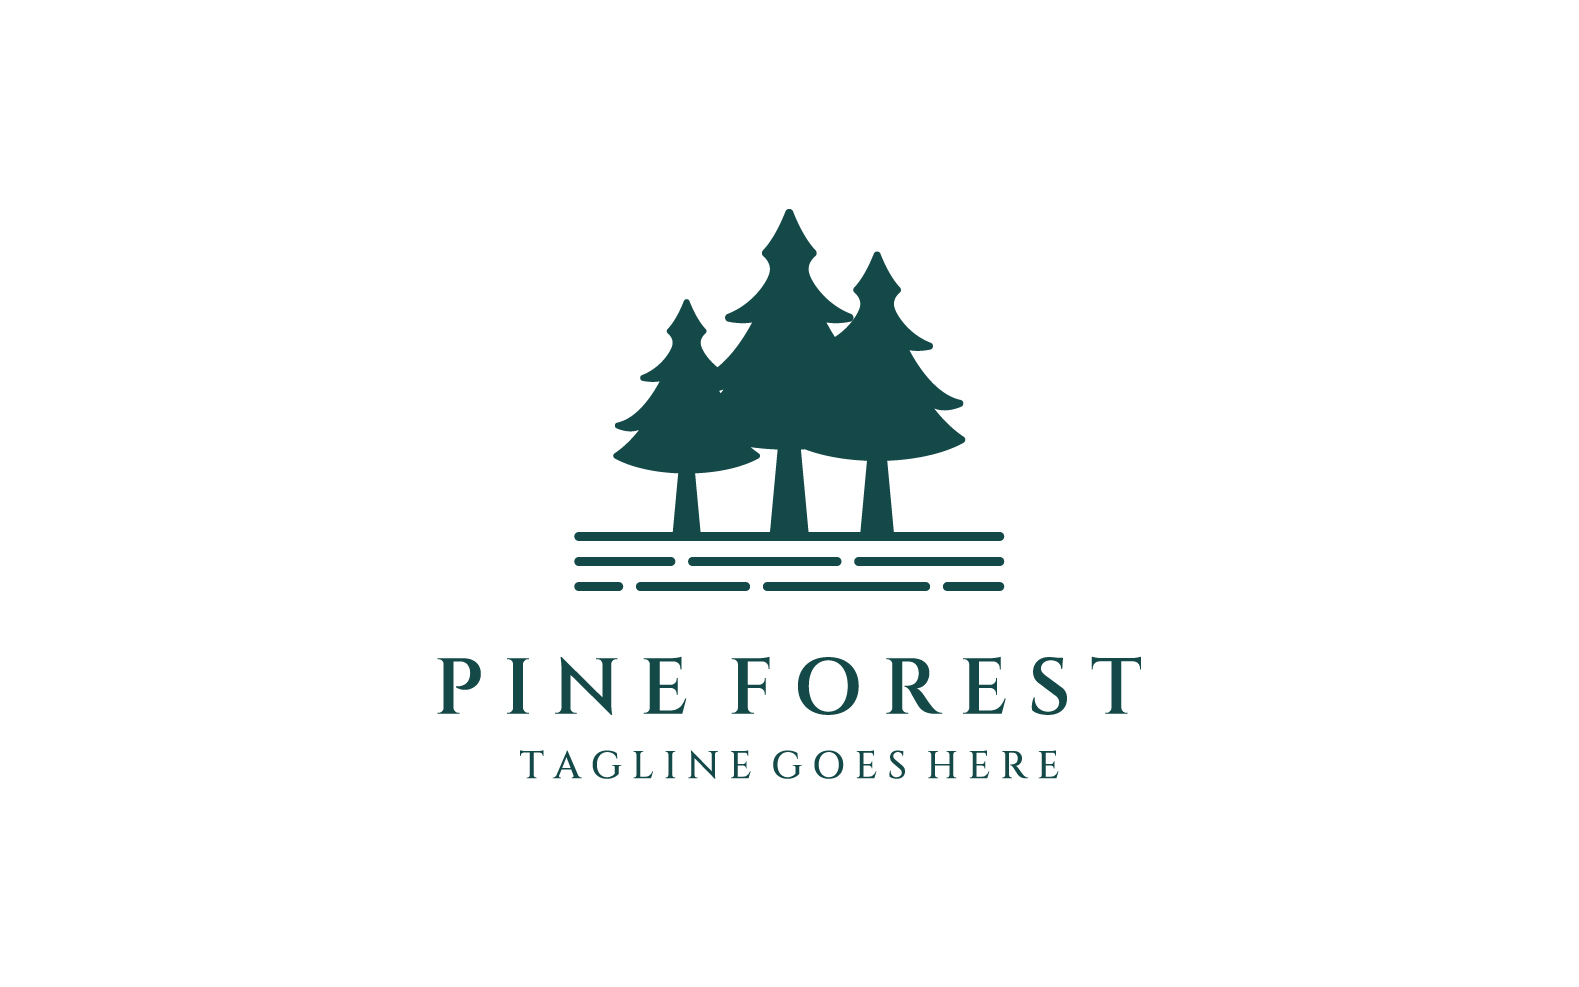 Pine forrest tree logo vector 12